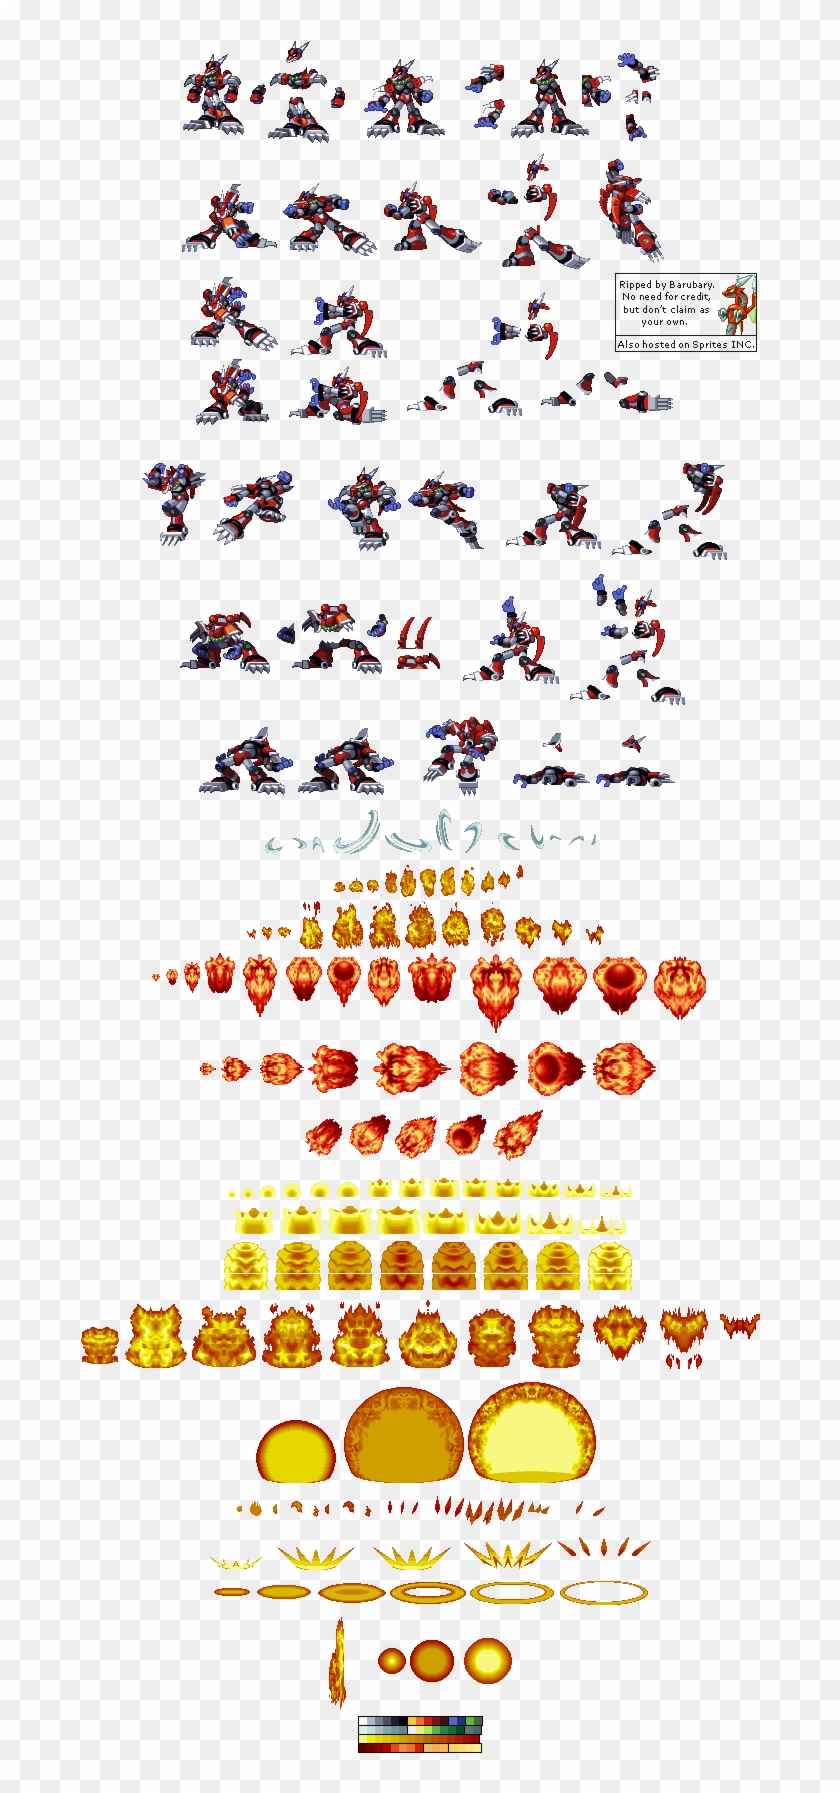 Magma Dragoon Video Game Sprites, Pixel Characters, - Megaman X Magma Dragoon Sprites Clipart